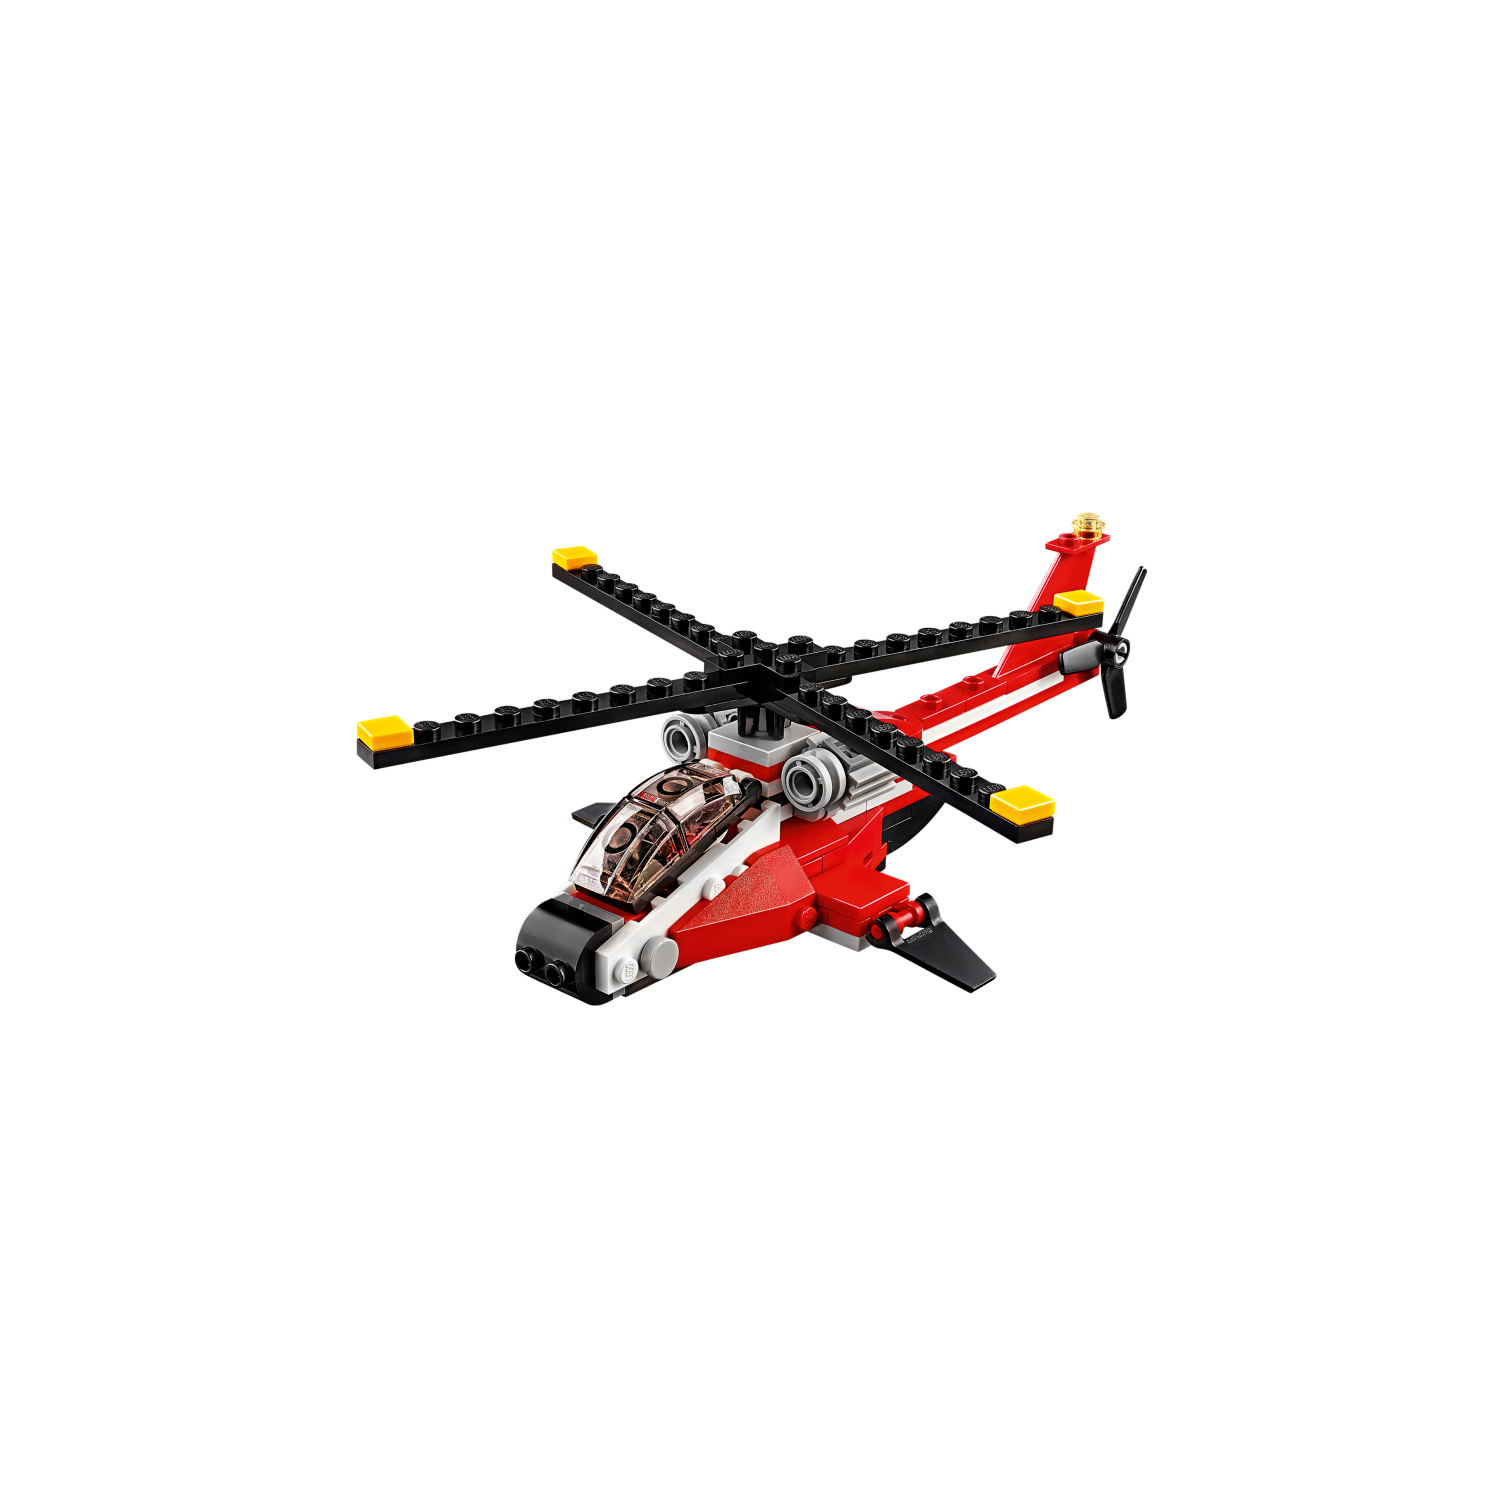 31057 LEGO Creator Zračna jurilica